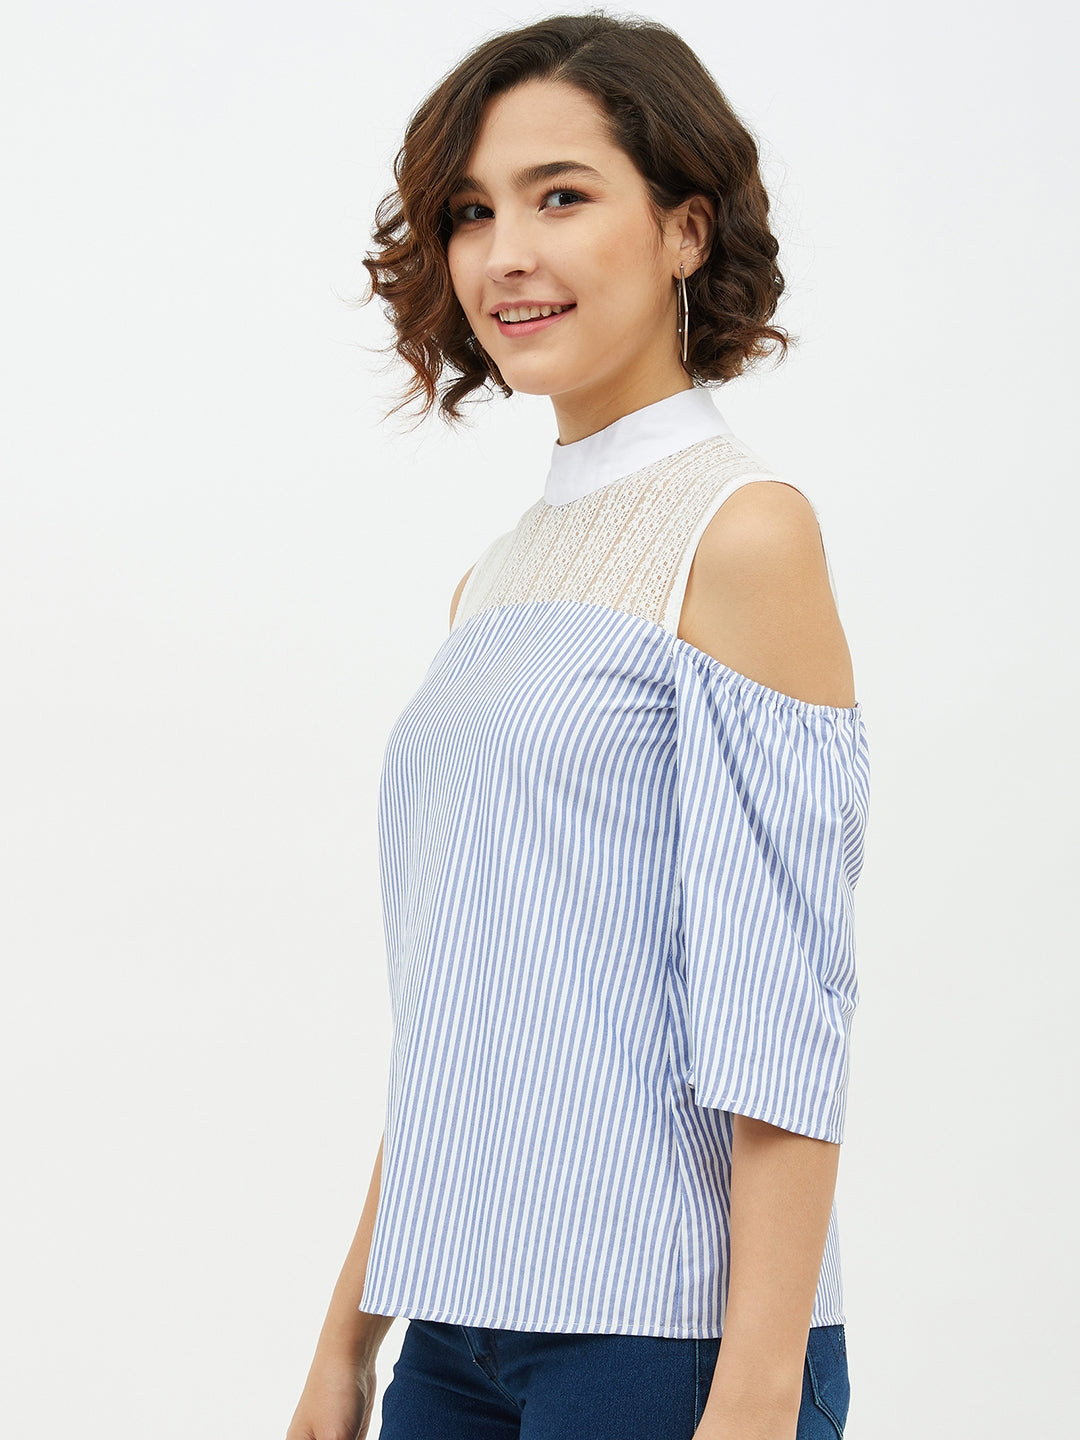 Women's Blue & White Cotton Stripe with Lace detail top - StyleStone